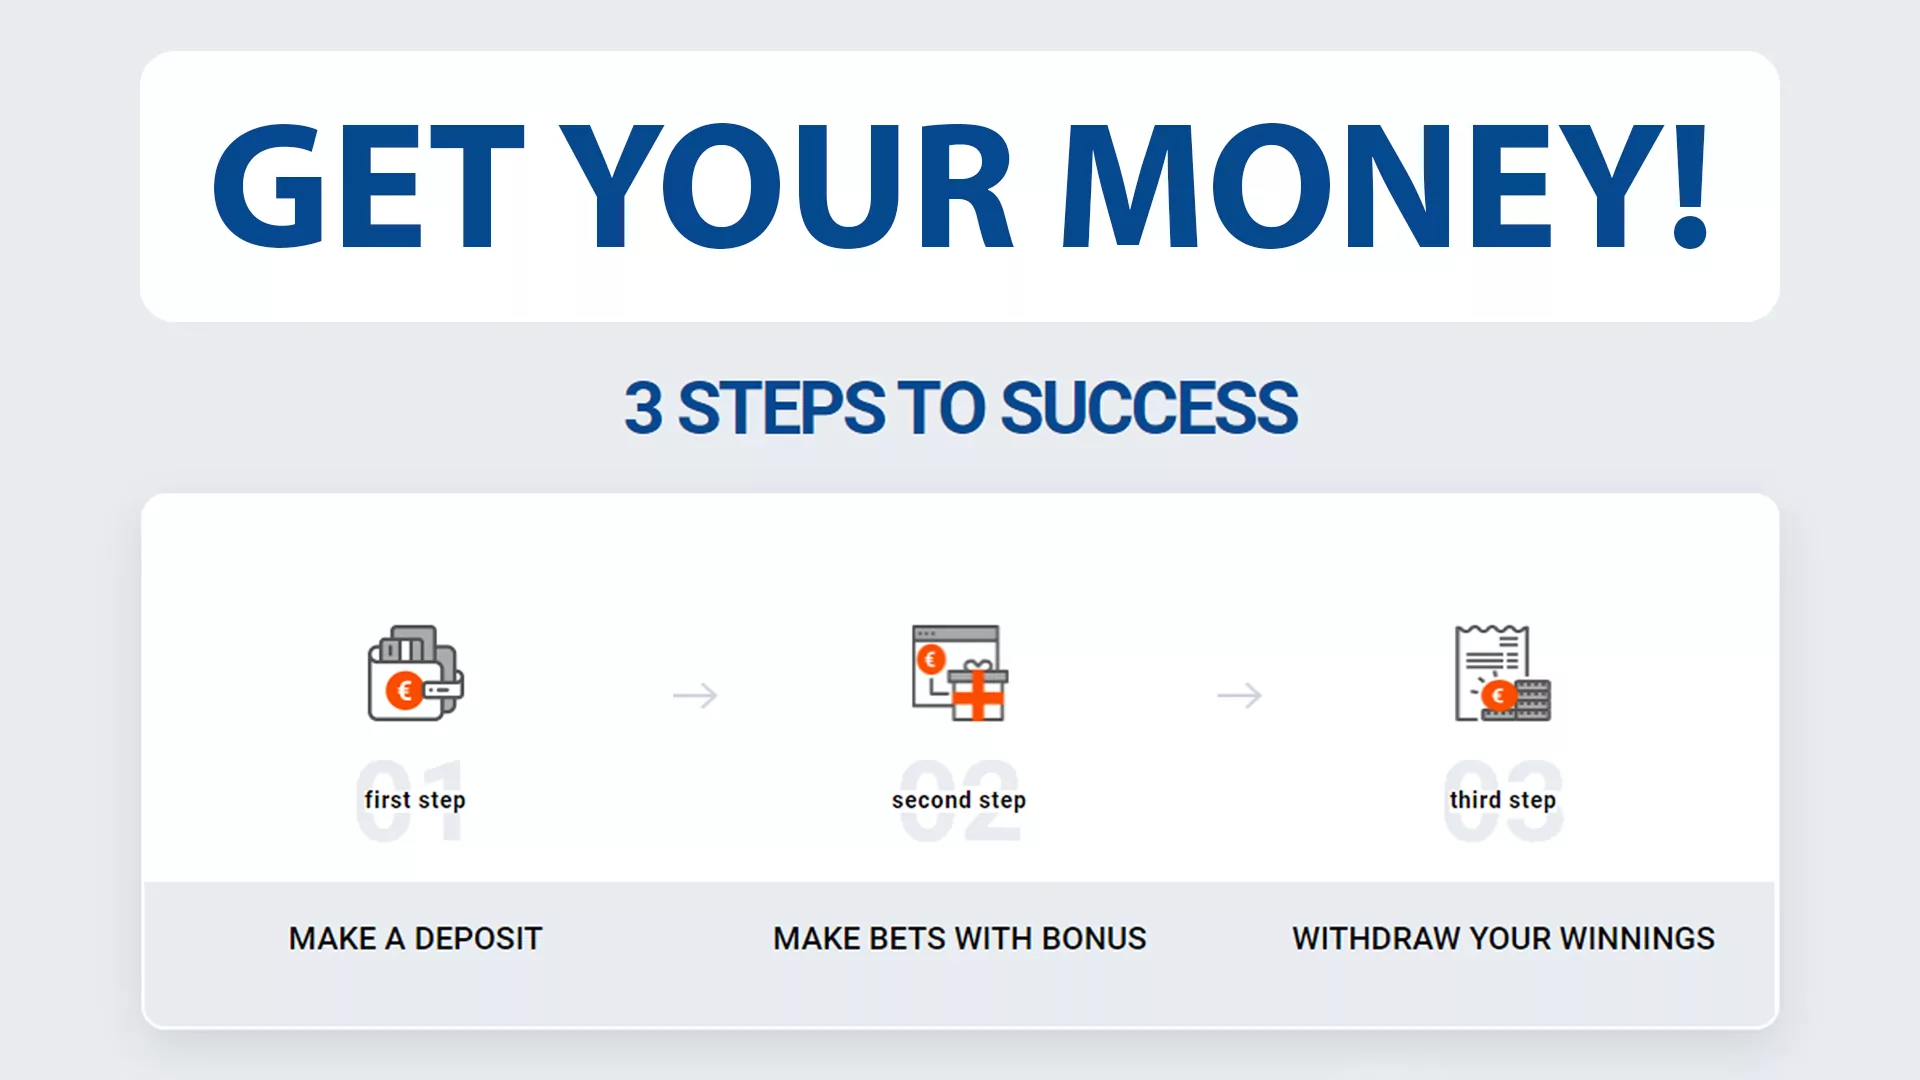 Make easy steps for getting free money.